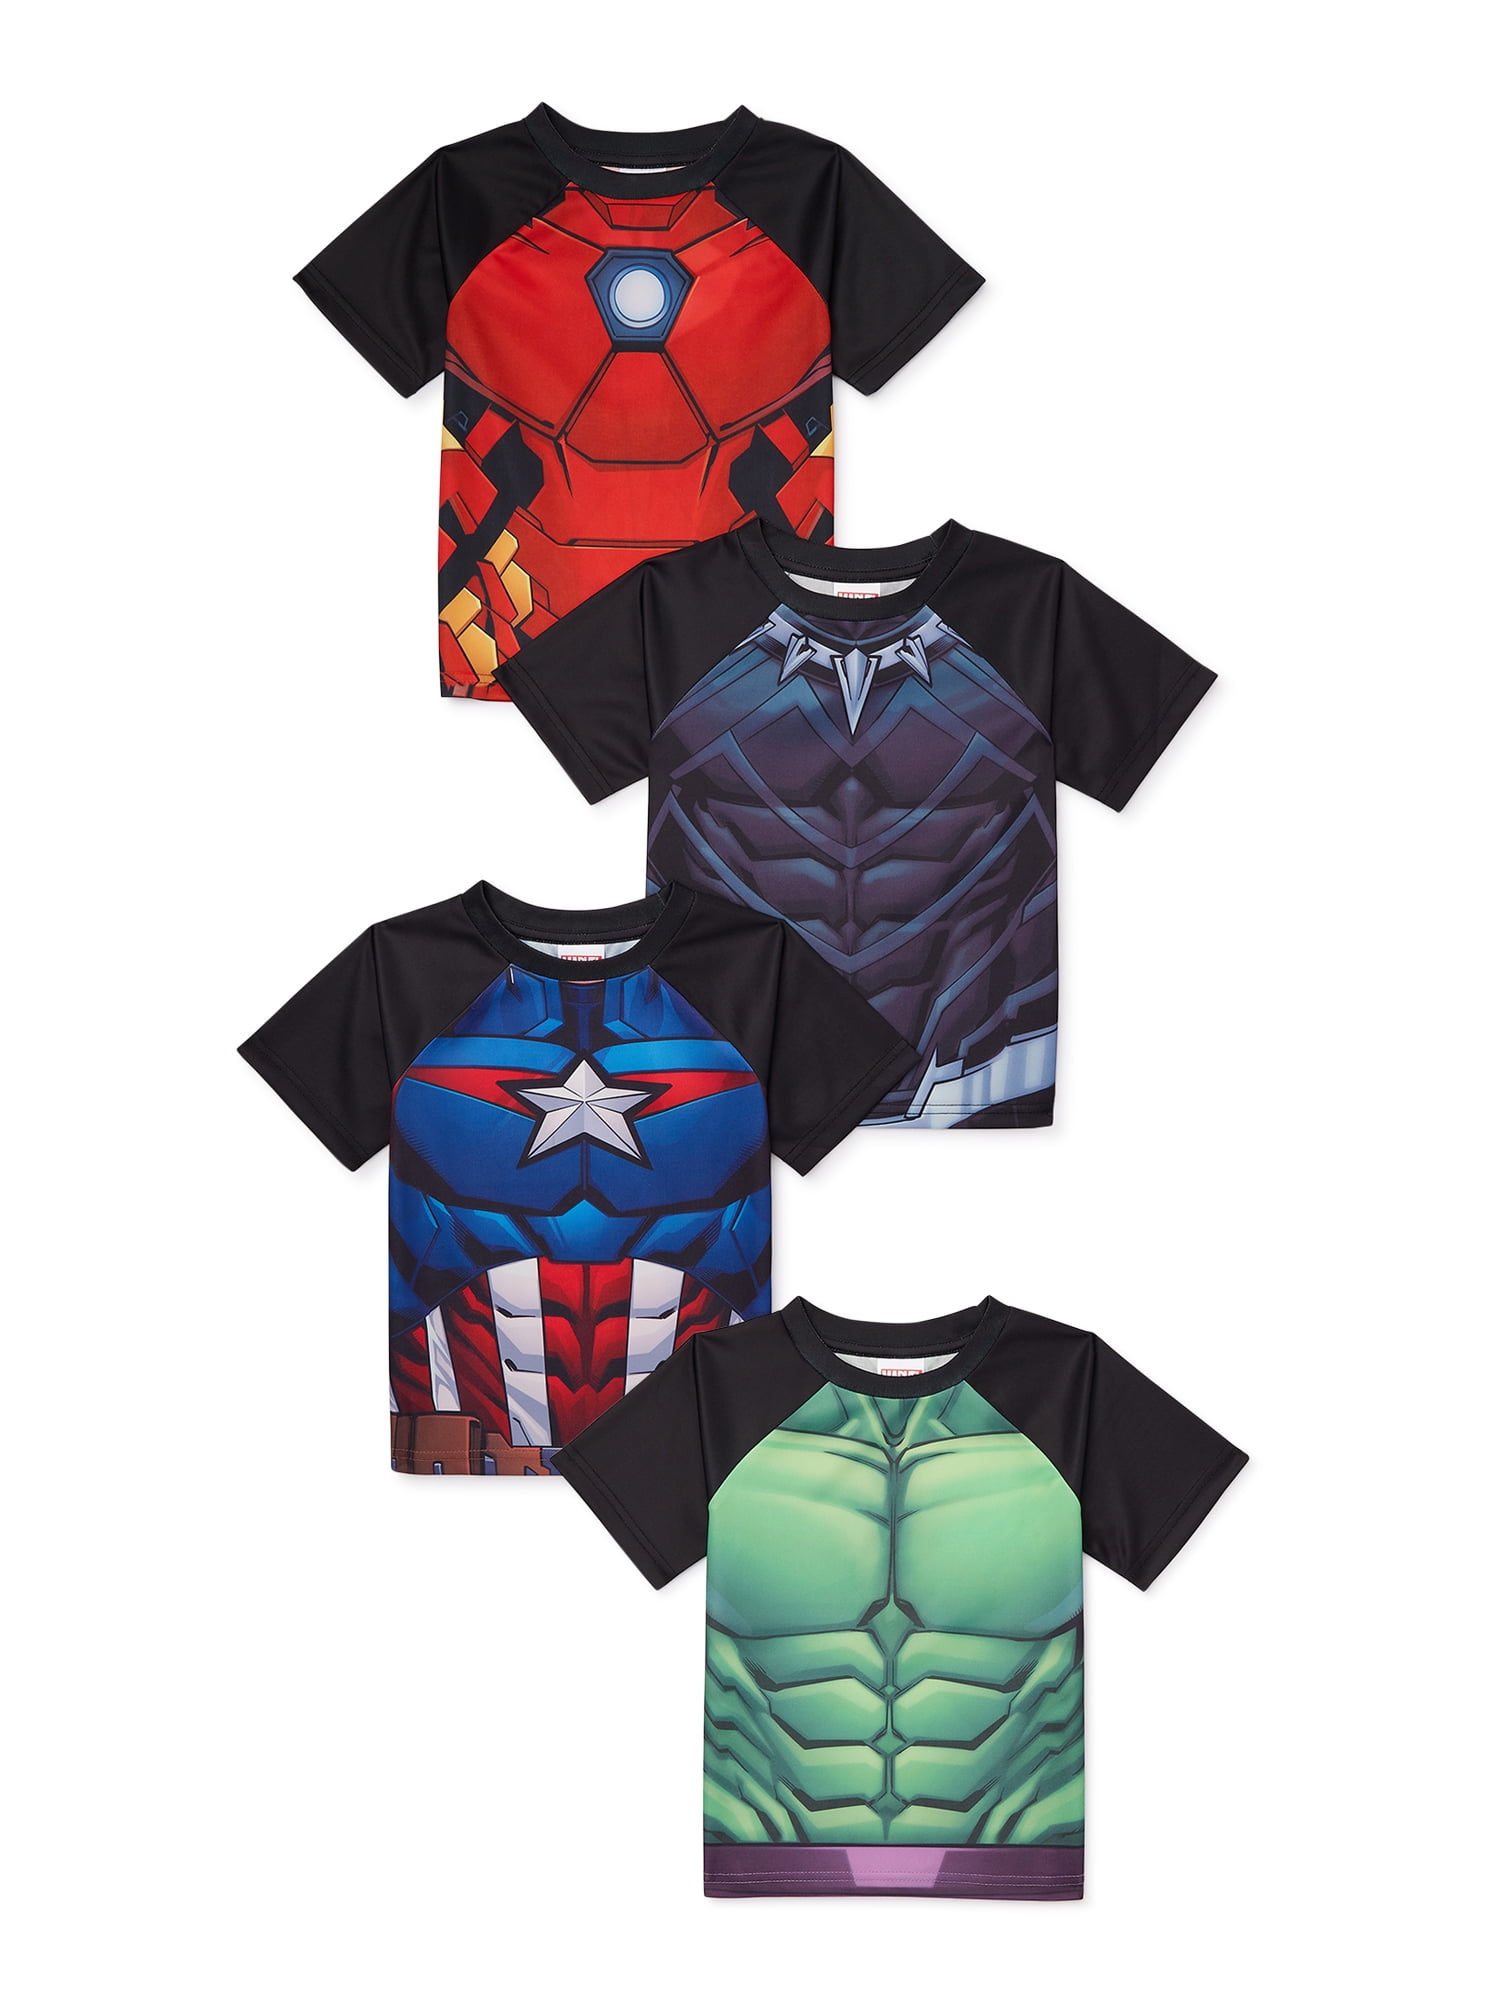 Marvel Avengers Toddler Boy 4Pk Short Sleeve Sublimated Cosplay Tees – Hulk, Captain America, Black Panther, Iron Man, Sizes 2T-5T